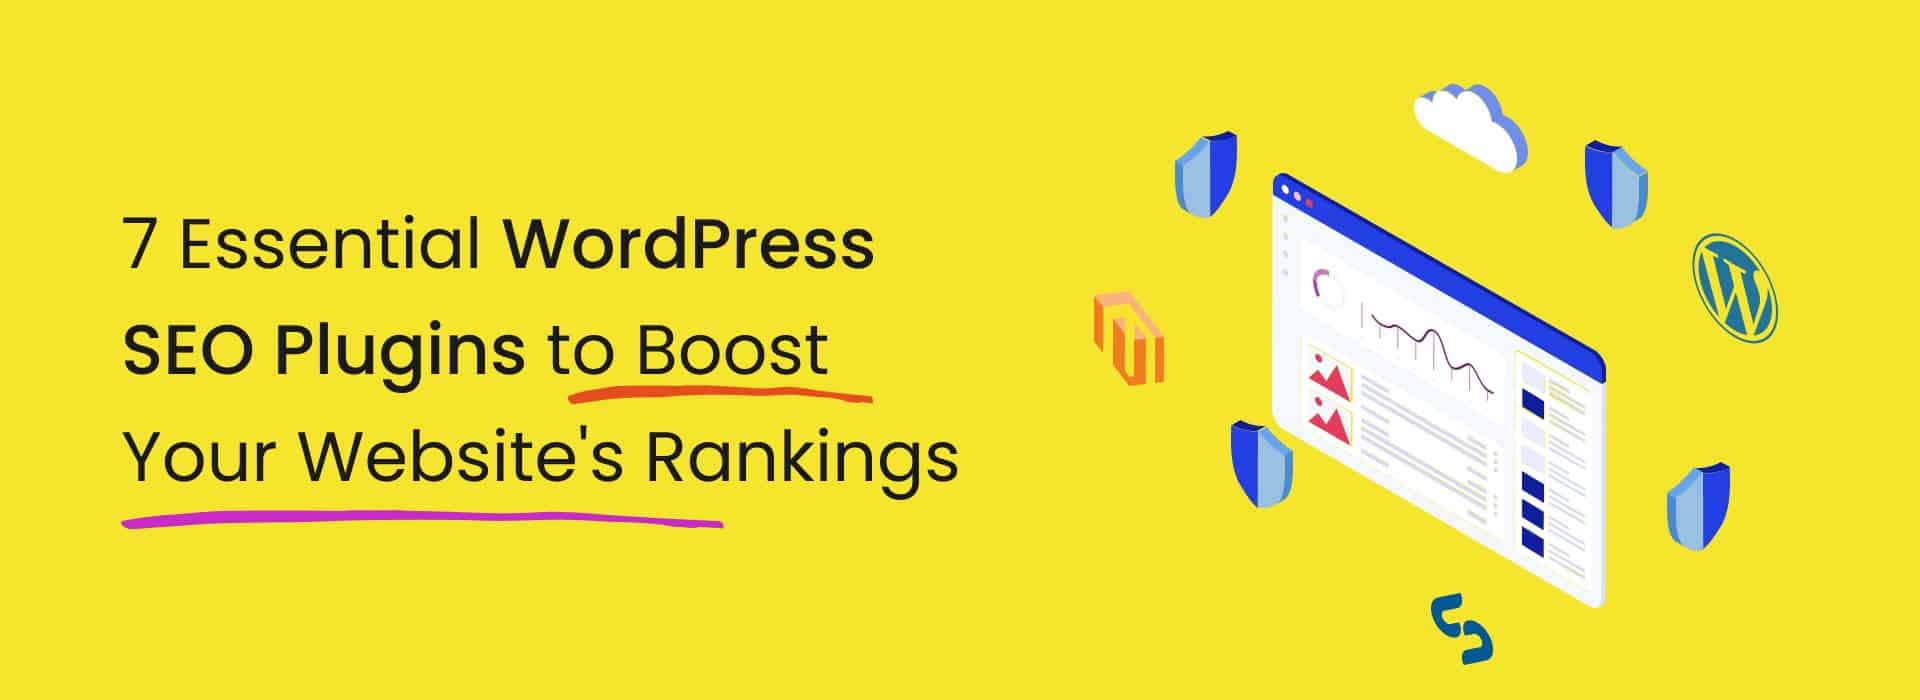 7-Essential-WordPress-SEO-Plugins-To-Boost-Your-Website’s-Ranking-min